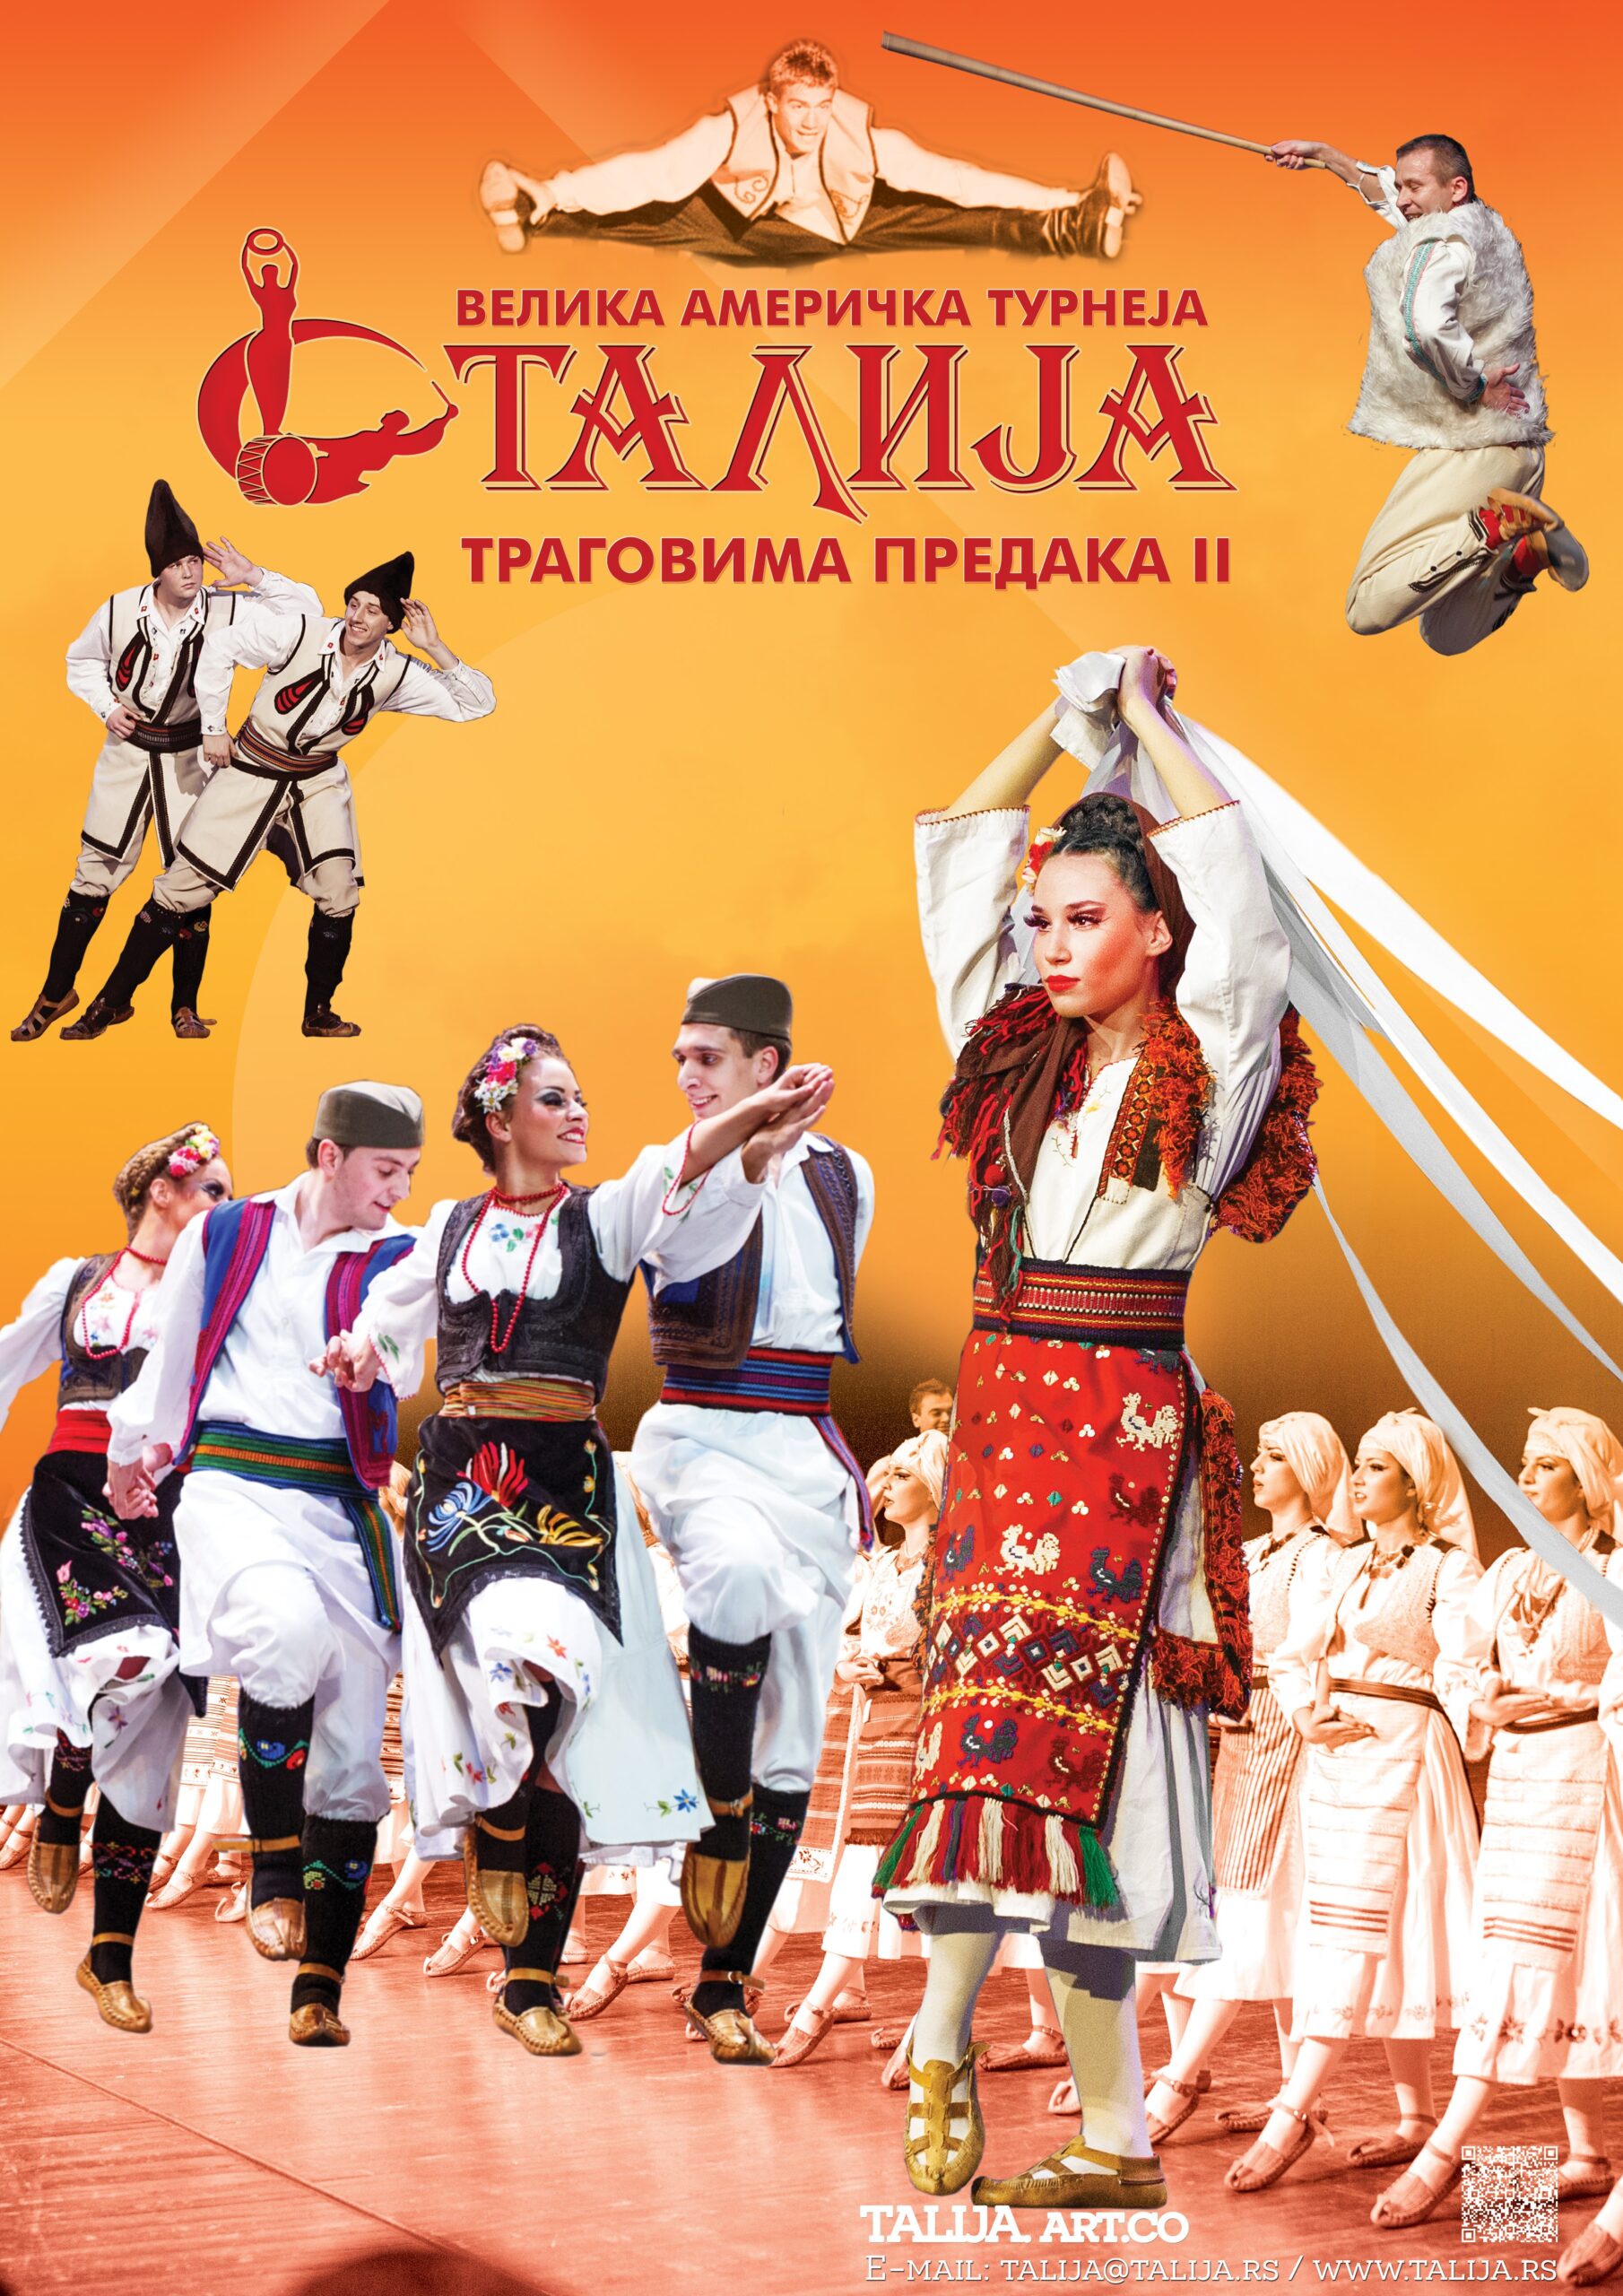 Serbian Folklore Group “Talija” – Thursday, October 30, 2014